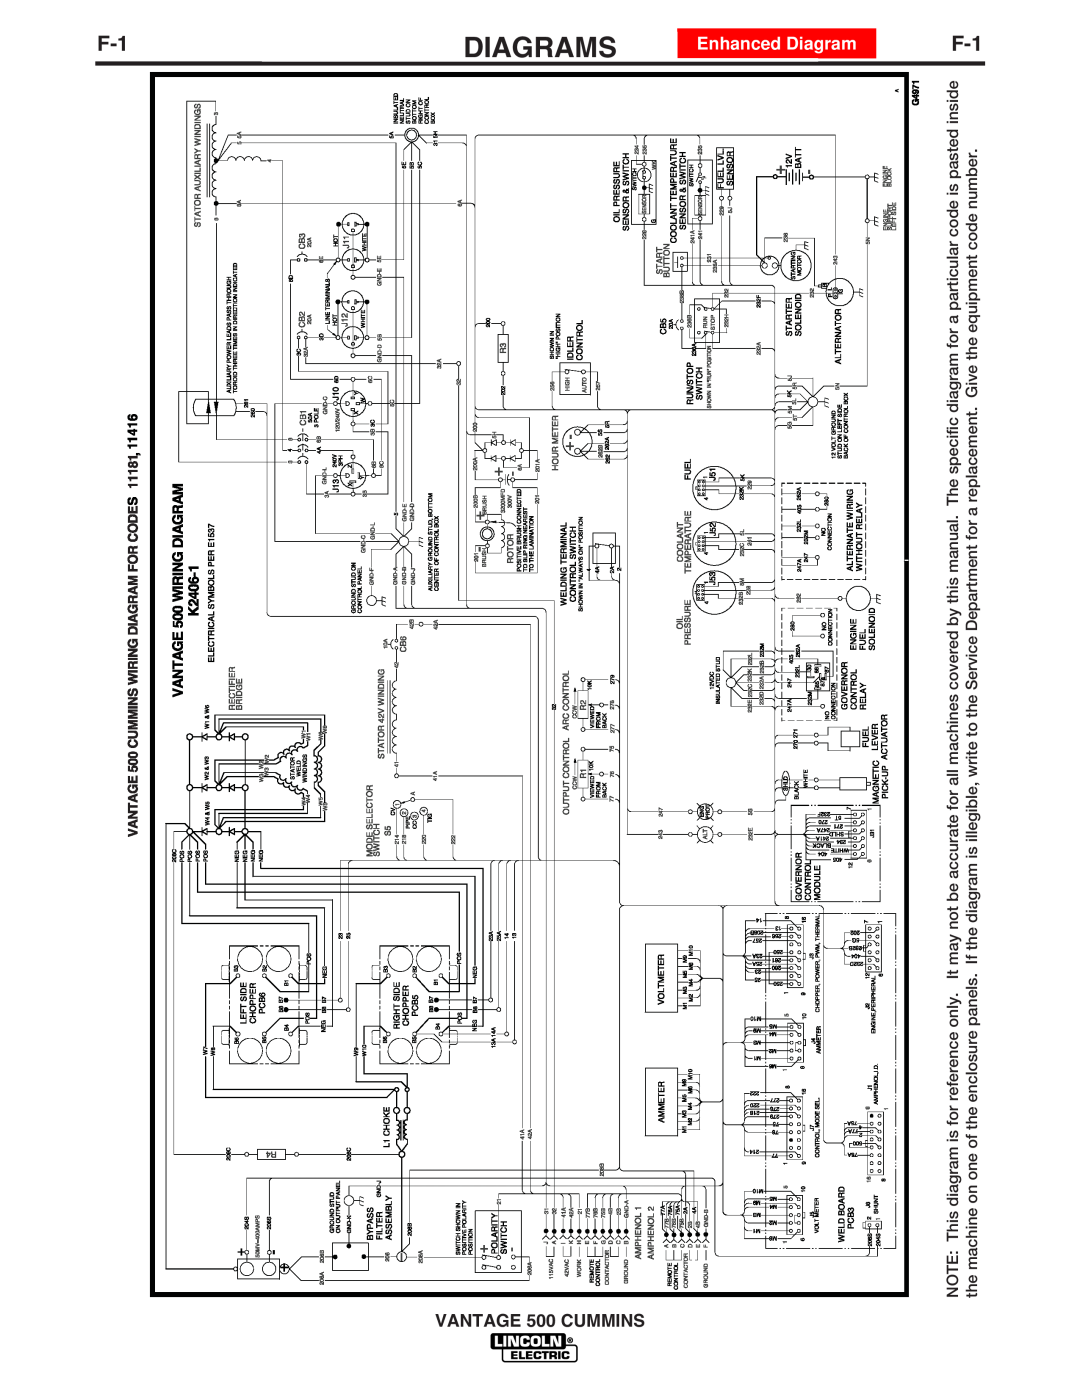 Lincoln Electric 500 manual Diagrams, Enhanced Diagram 